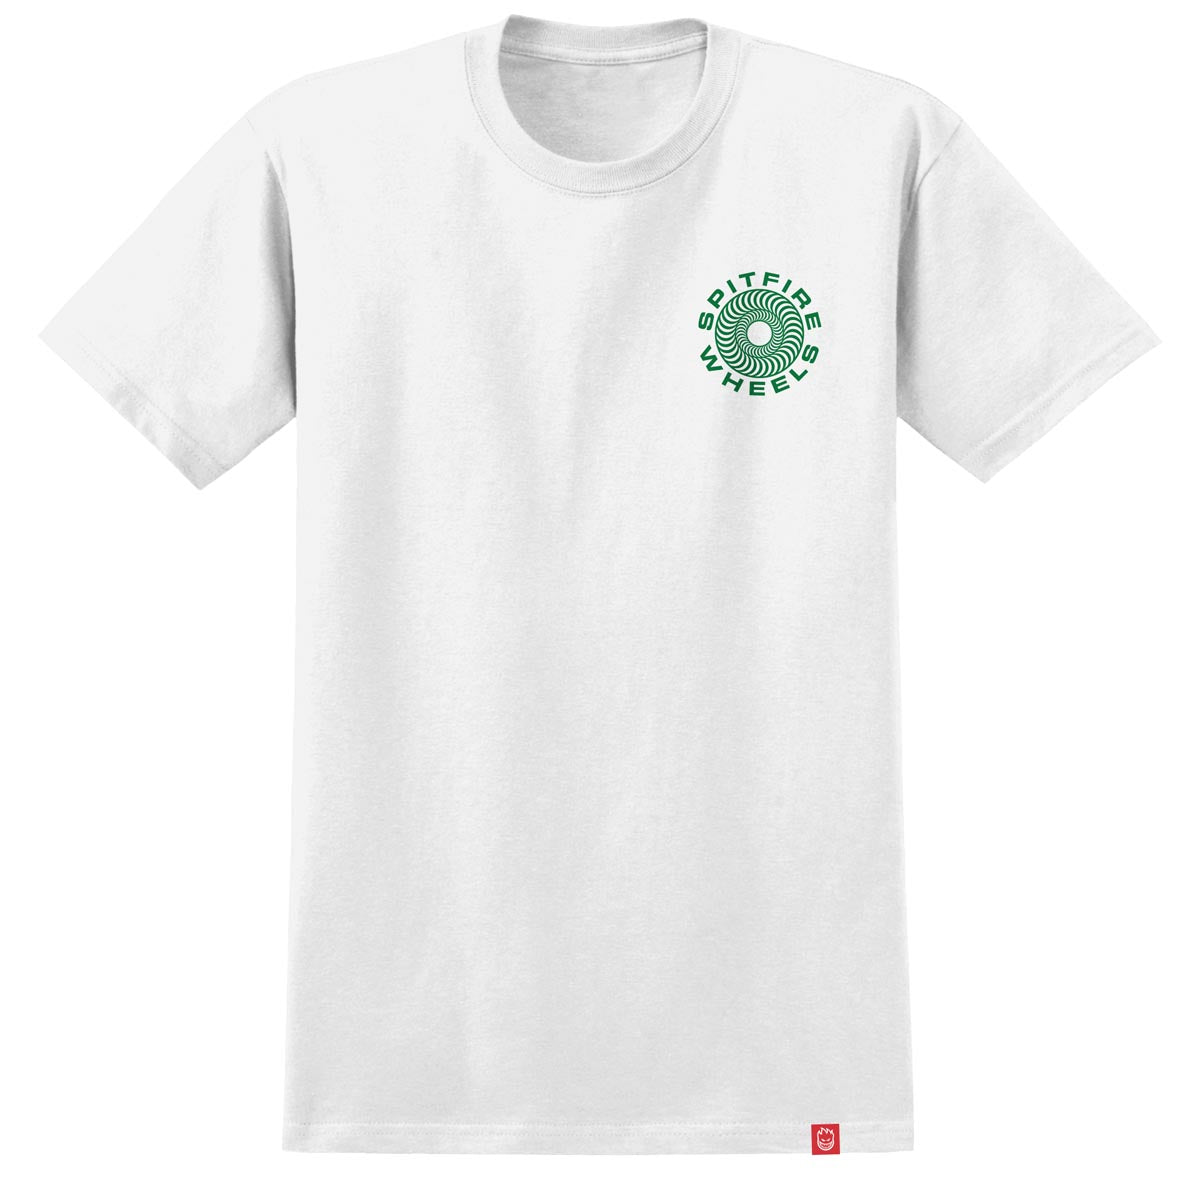 Spitfire Classic '87 Swirl Short Sleeve T-Shirt (White/Green)